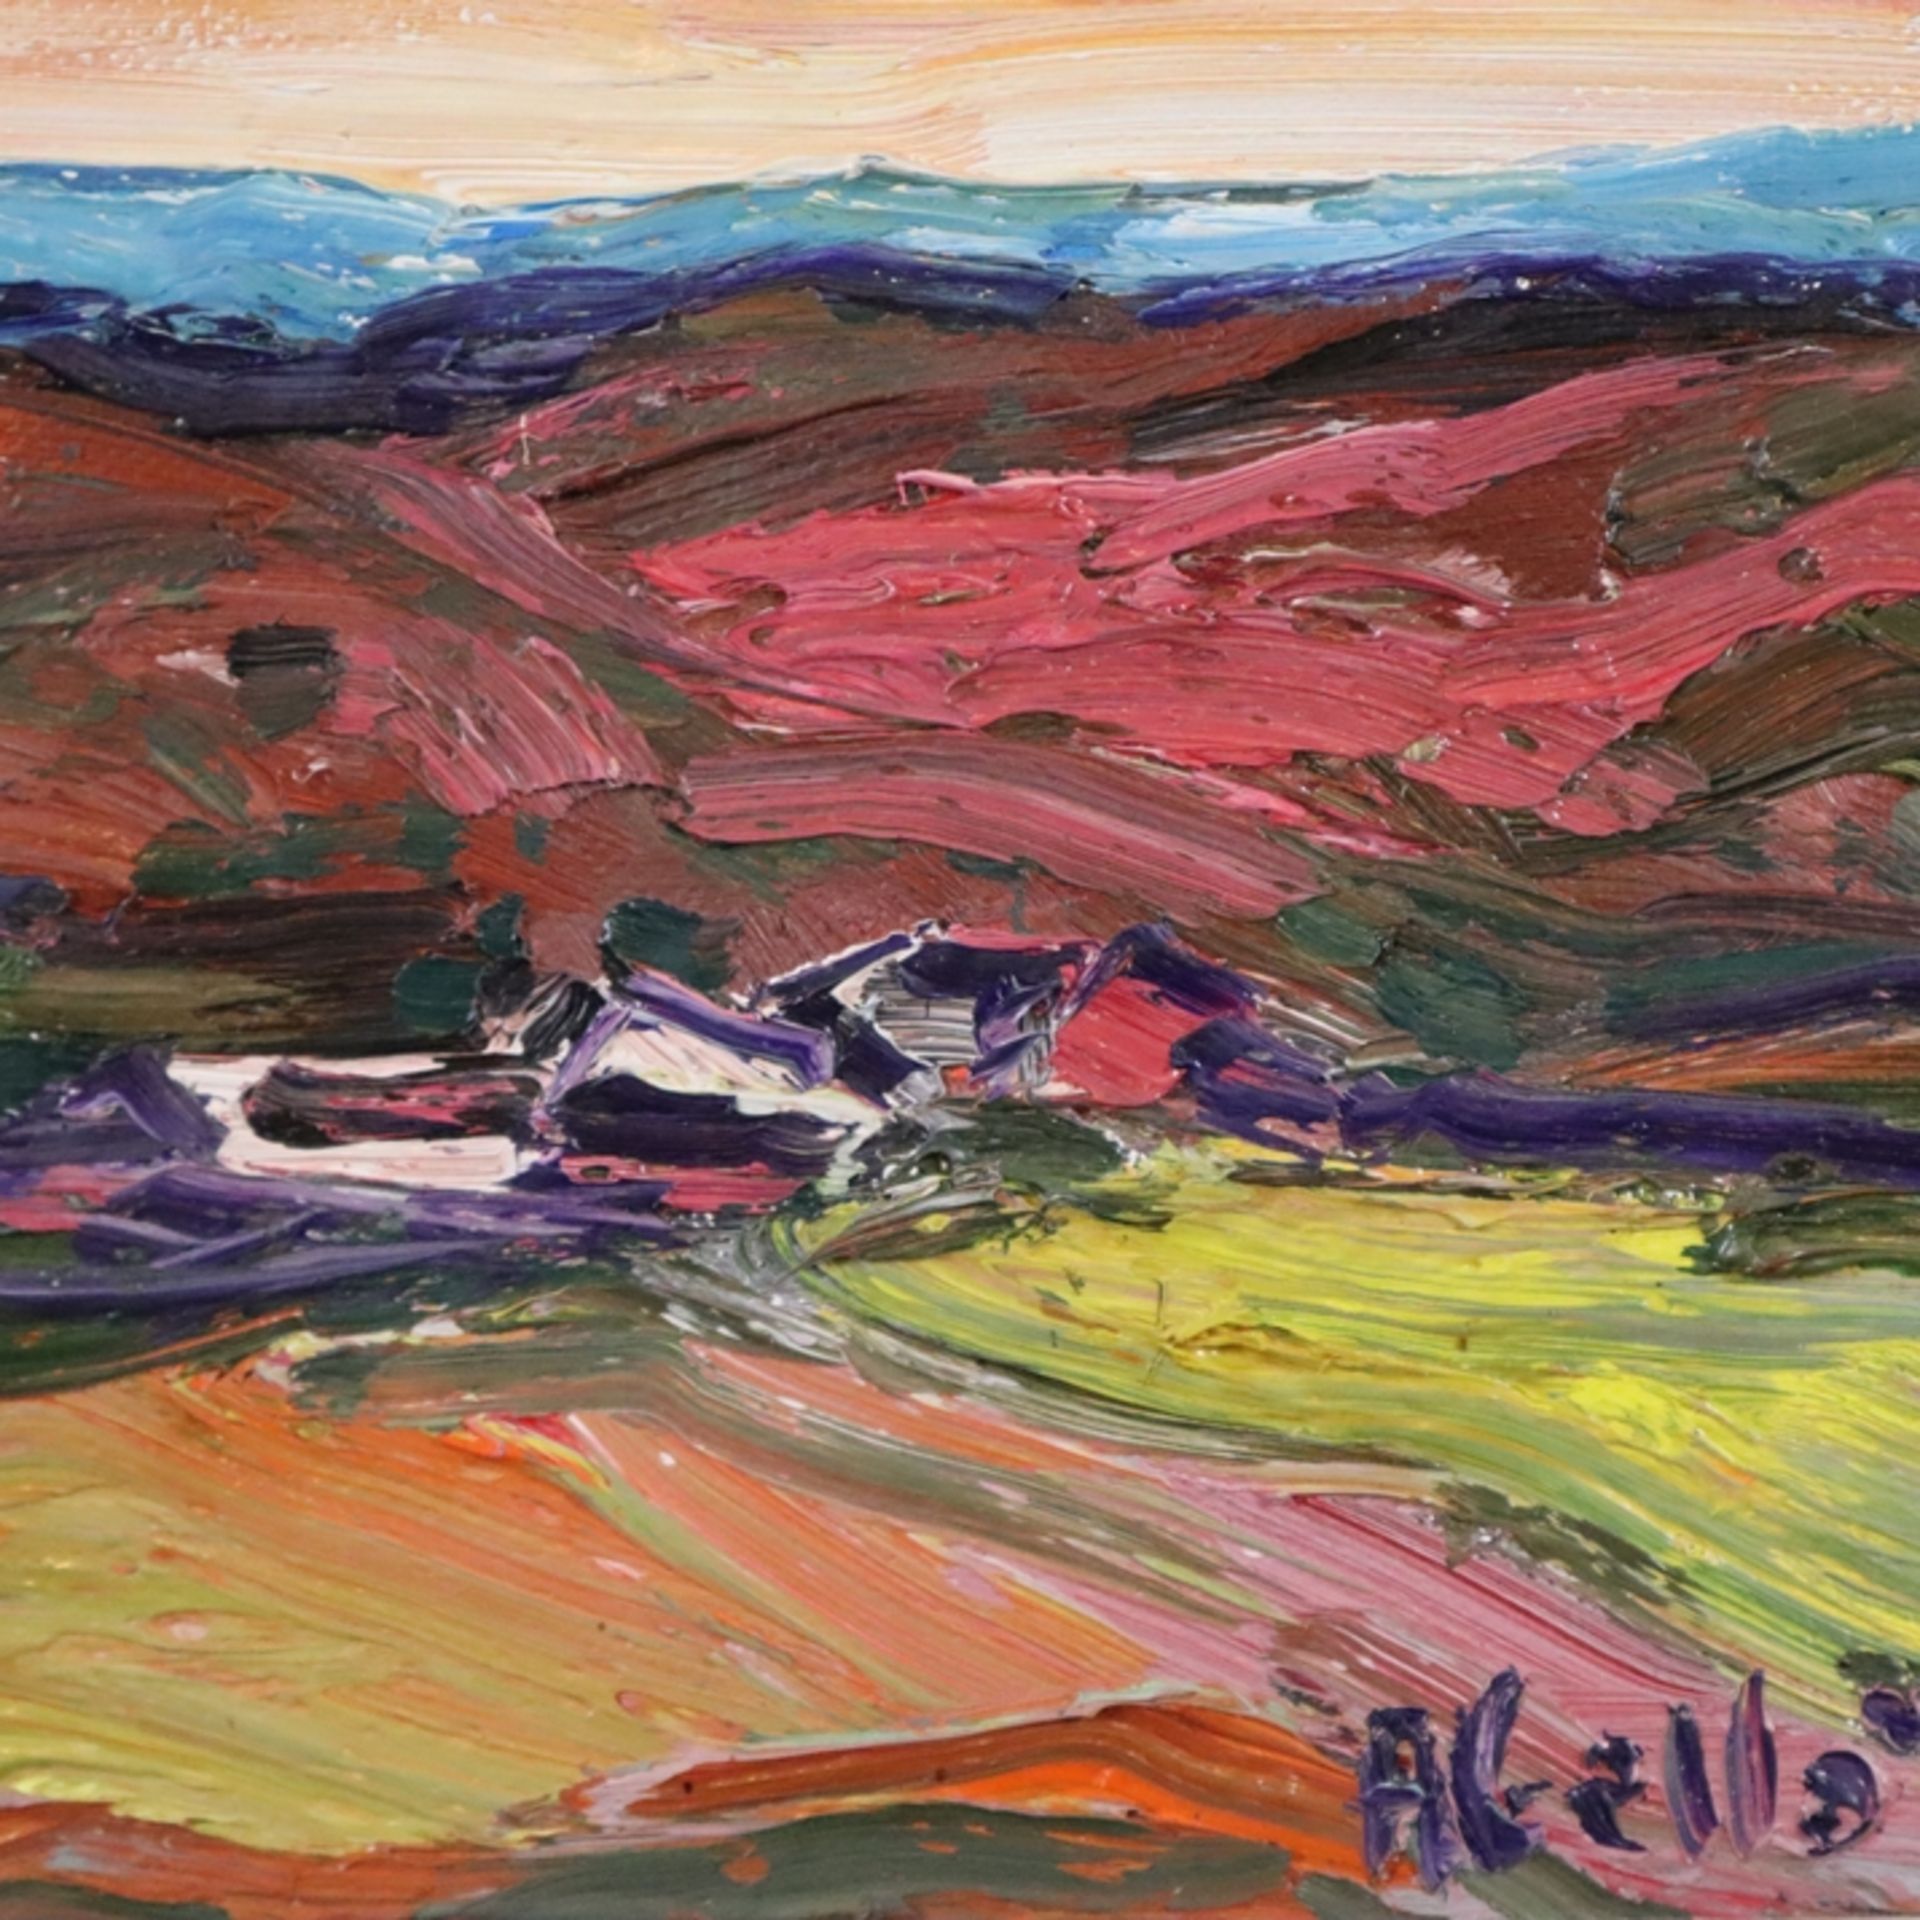 Abelló, Joan (Mollet del Vallès, Barcelona, 1922 - Barcelona 2008) - Landschaft, Öl auf Leinwand, - Bild 2 aus 8